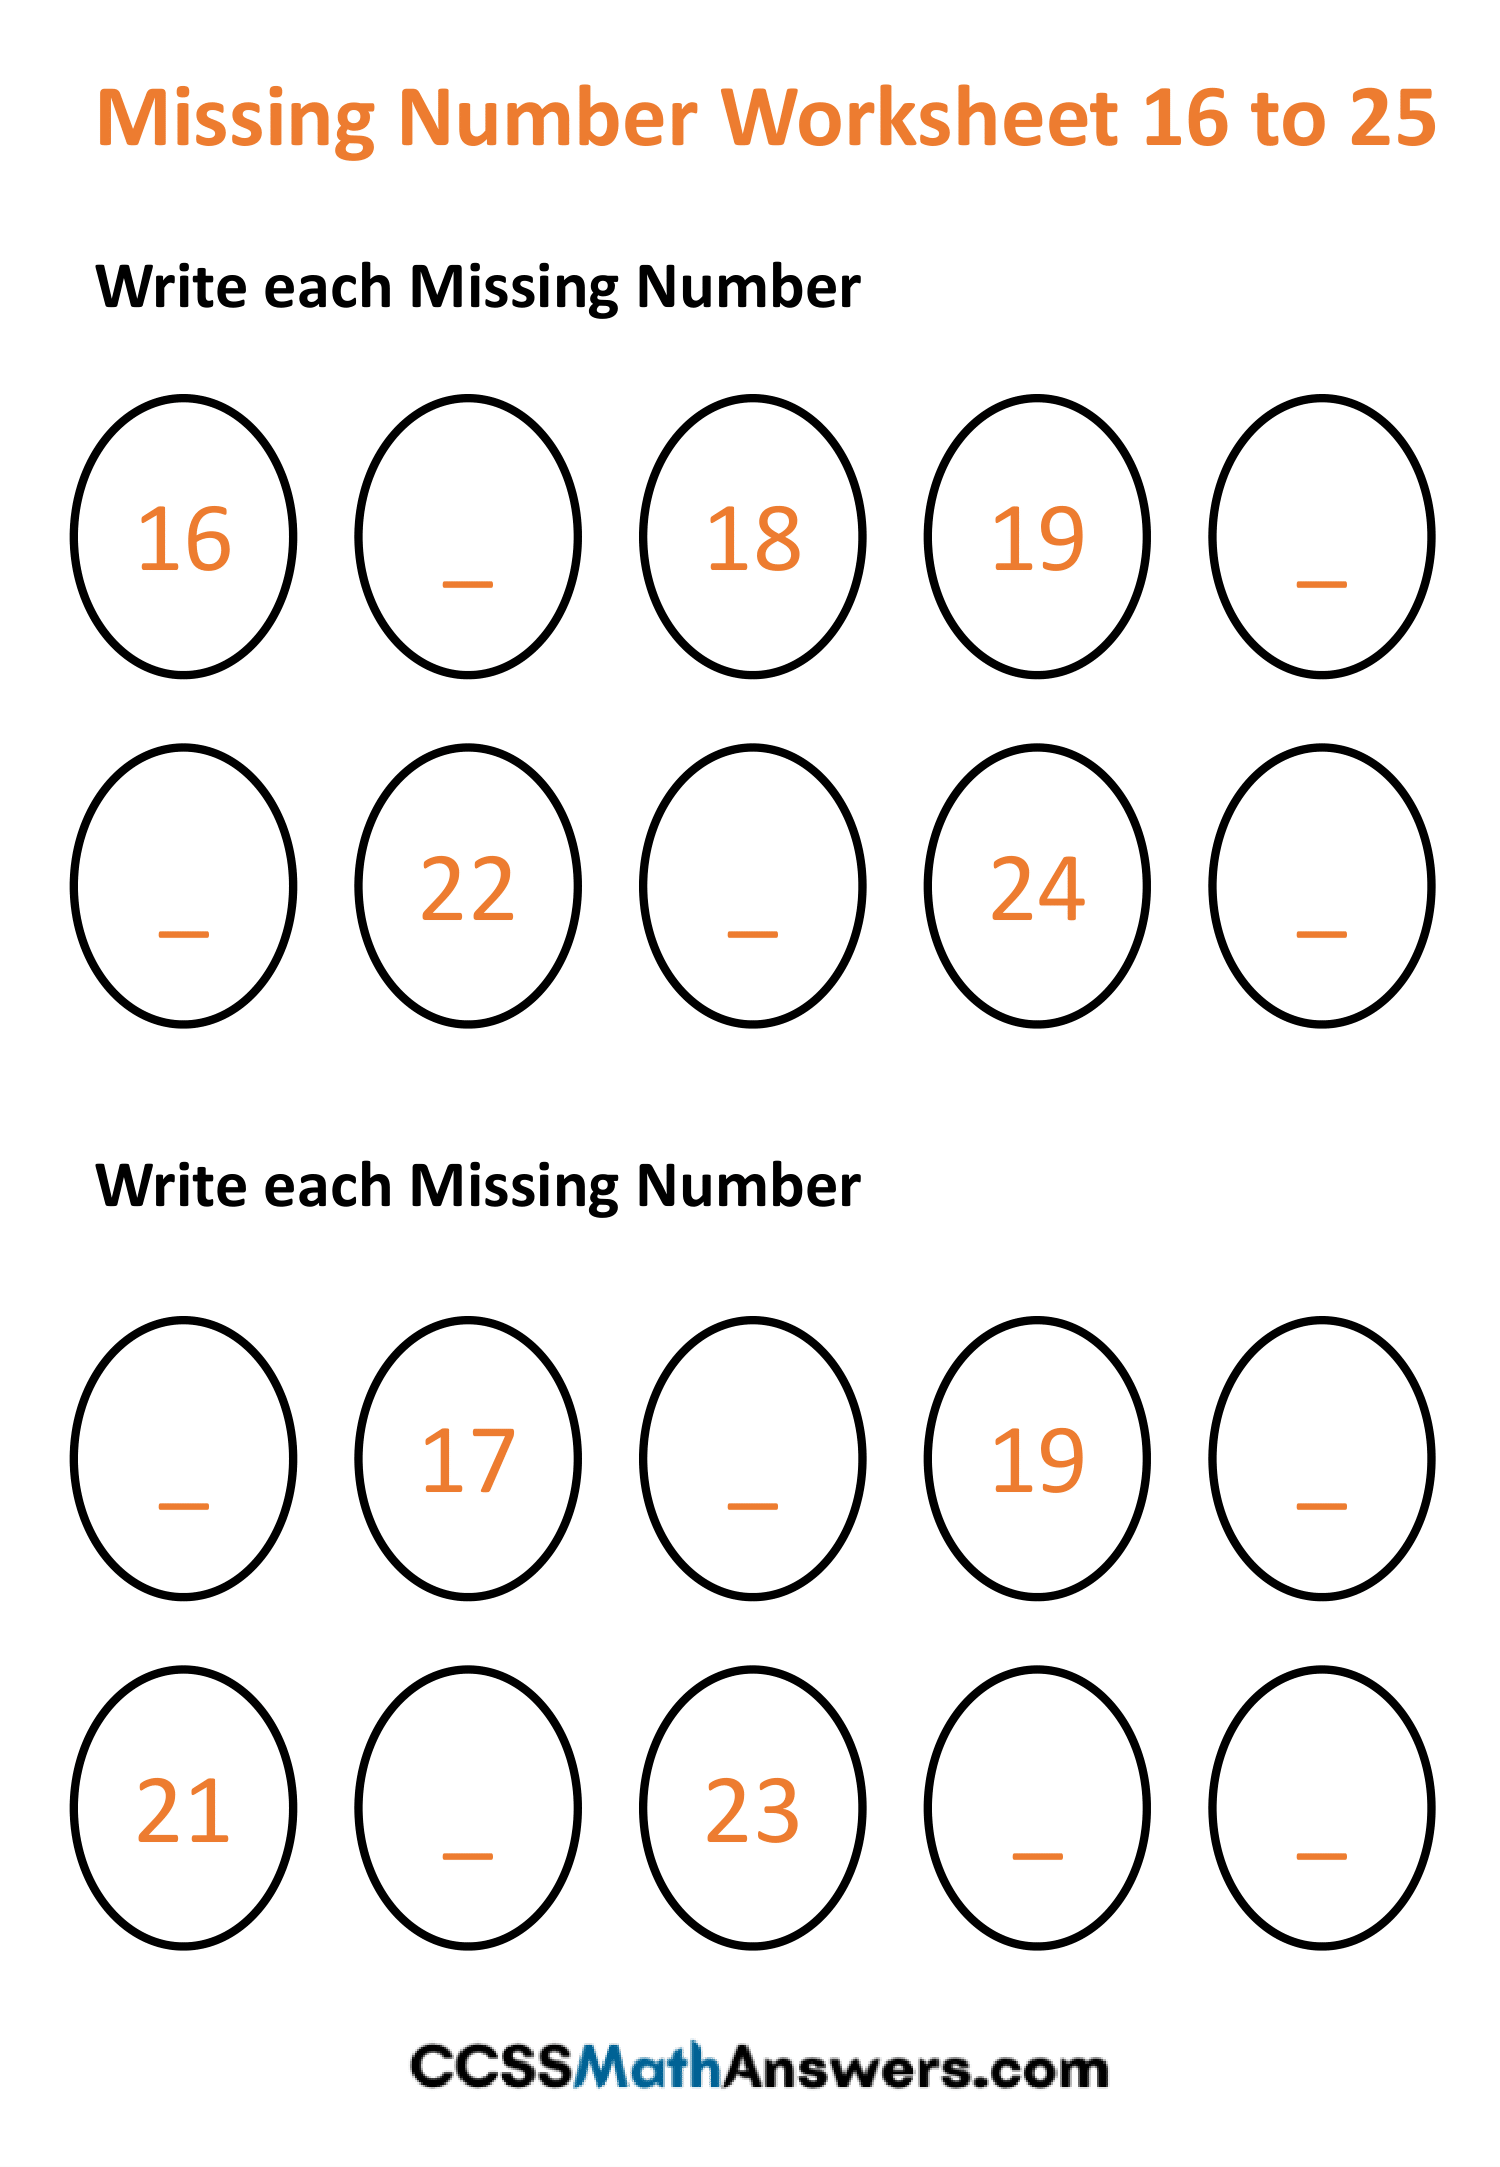 Missing Number Worksheet 16 to 25